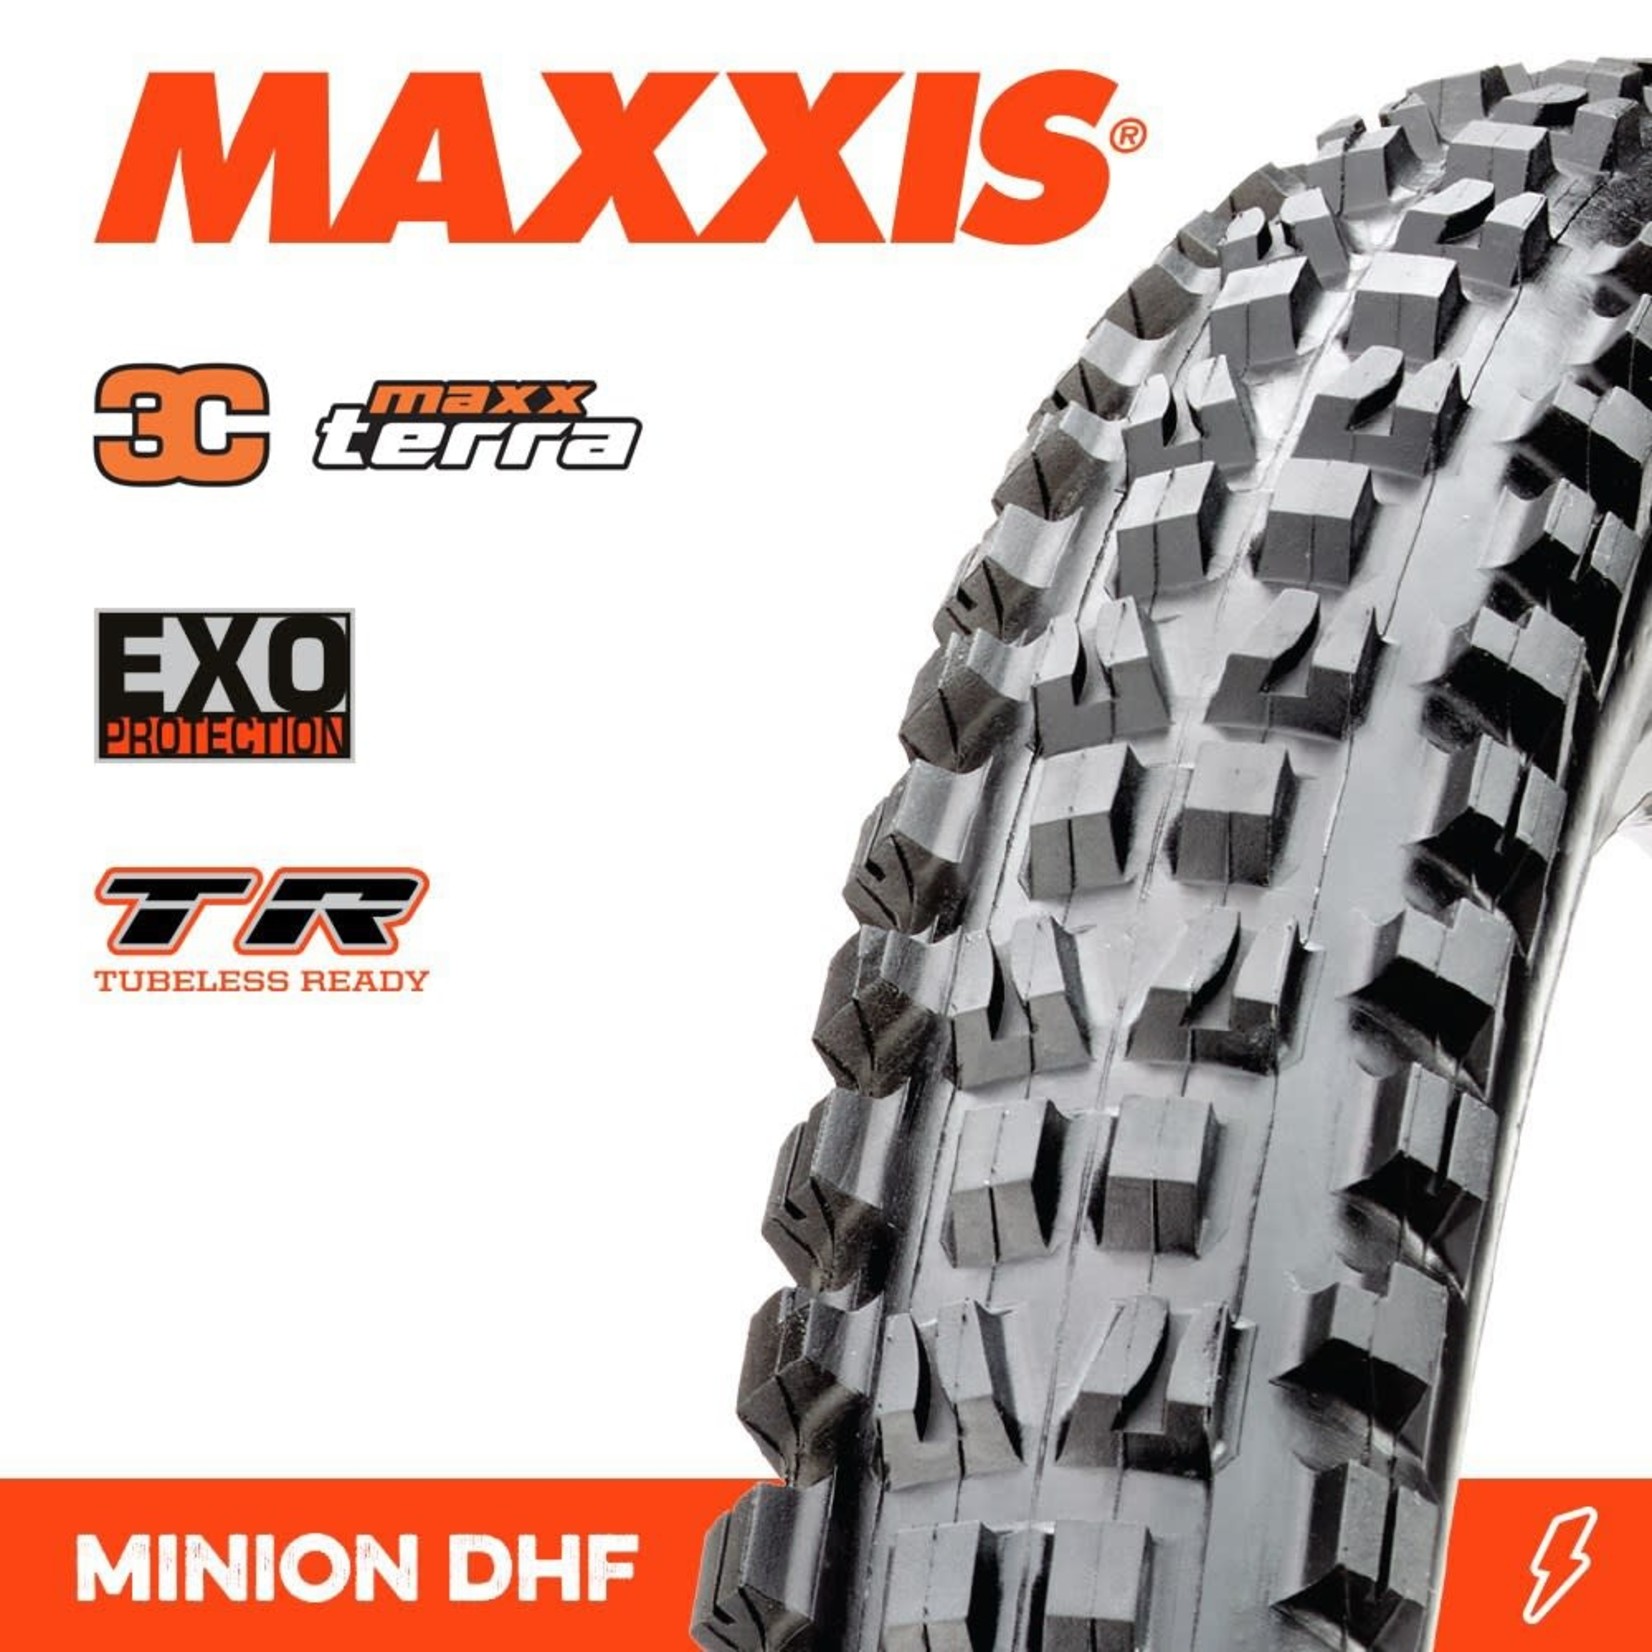 Maxxis Maxxis Minion DHF Bike Tyre - 29 X 2.50 WT 3C Terra EXO TR Folding 60TPI - Pair